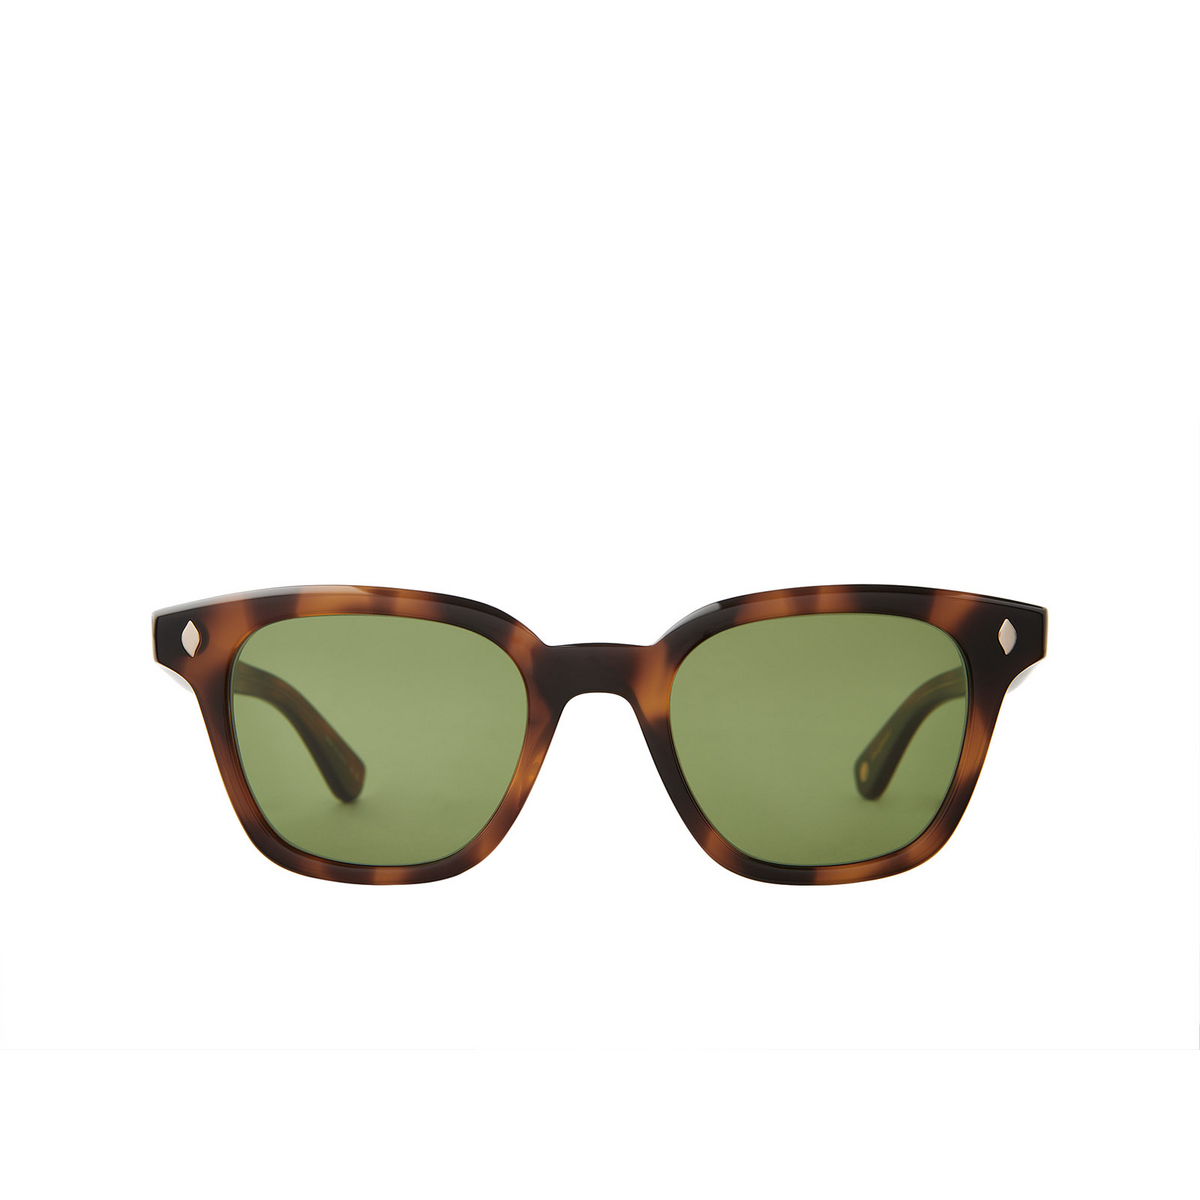 Garrett Leight BROADWAY Sunglasses SPBRNSH/SFPGN Spotted Brown Shell - front view